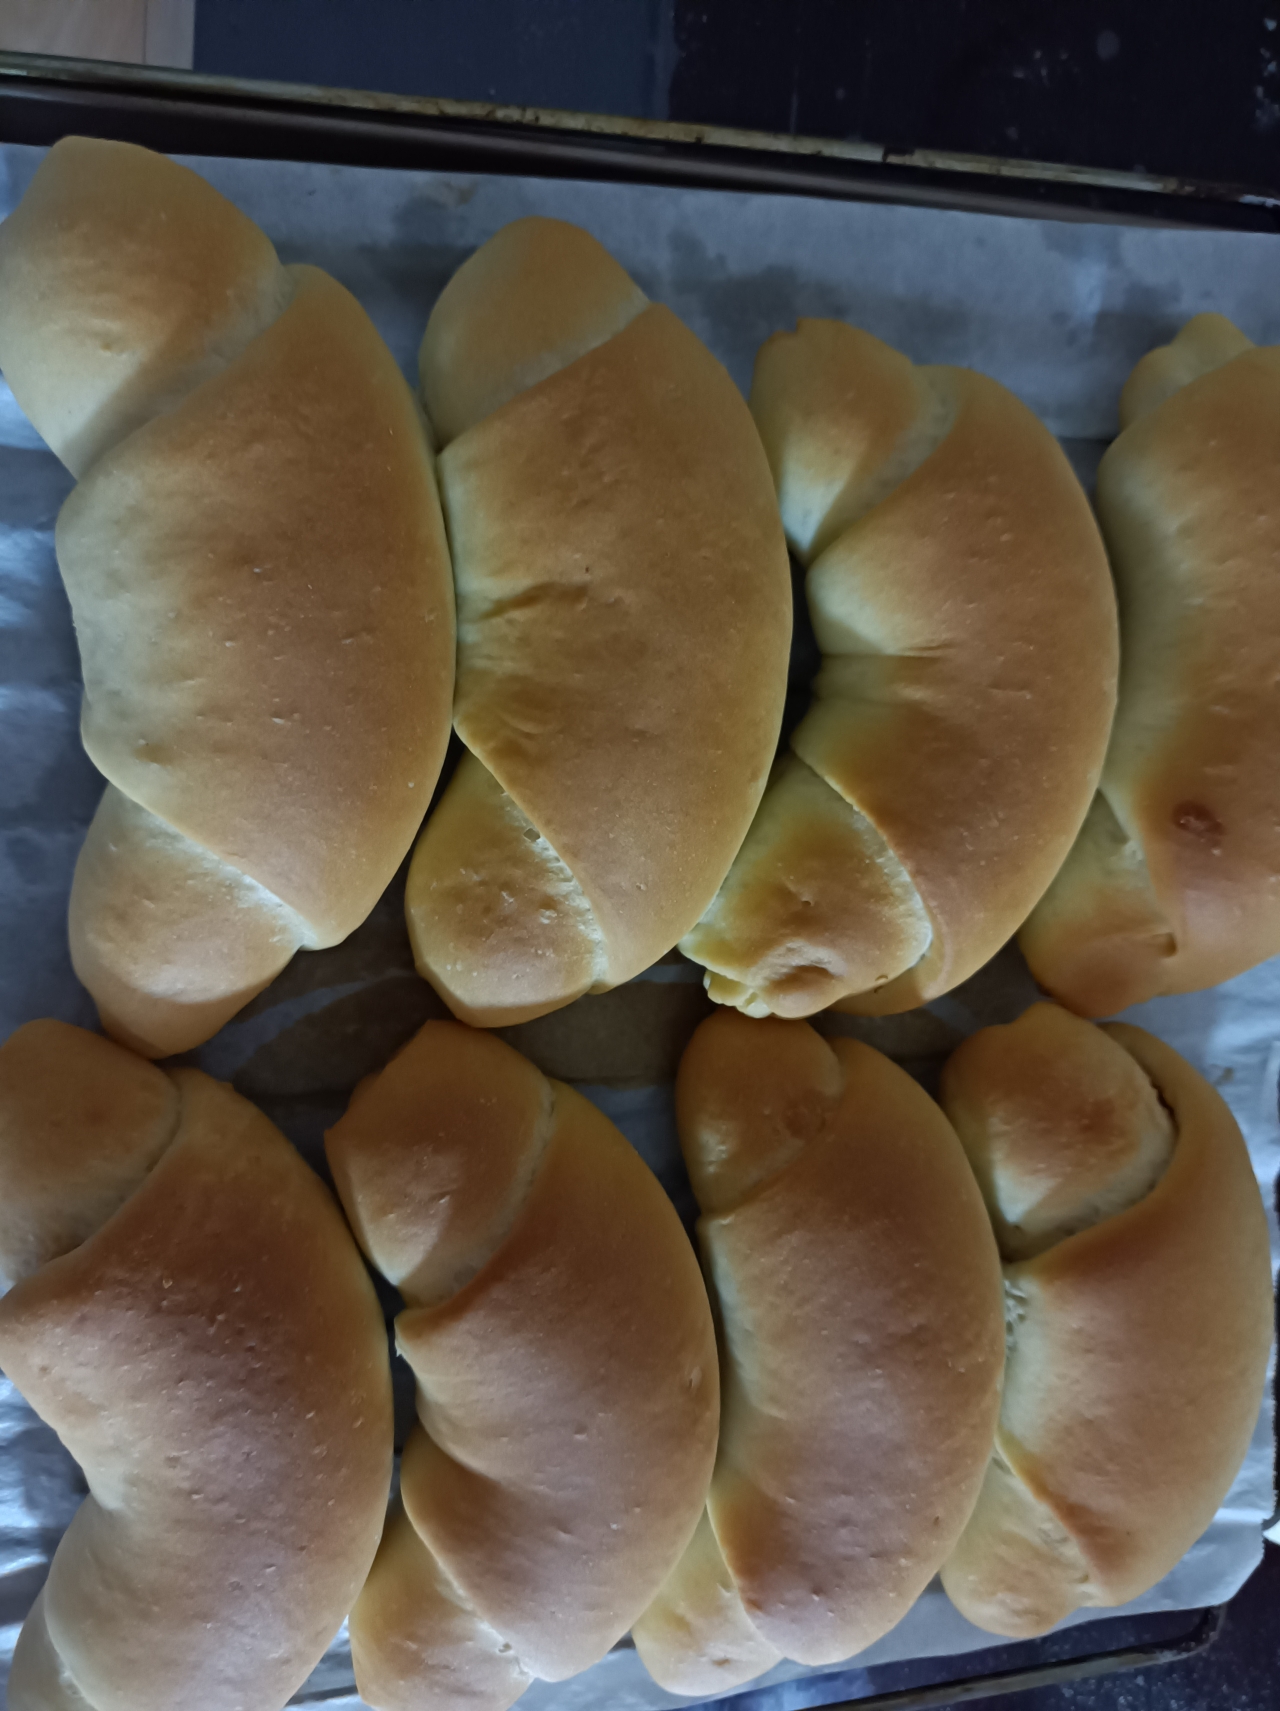 老式油酥面包 Yusu Bread